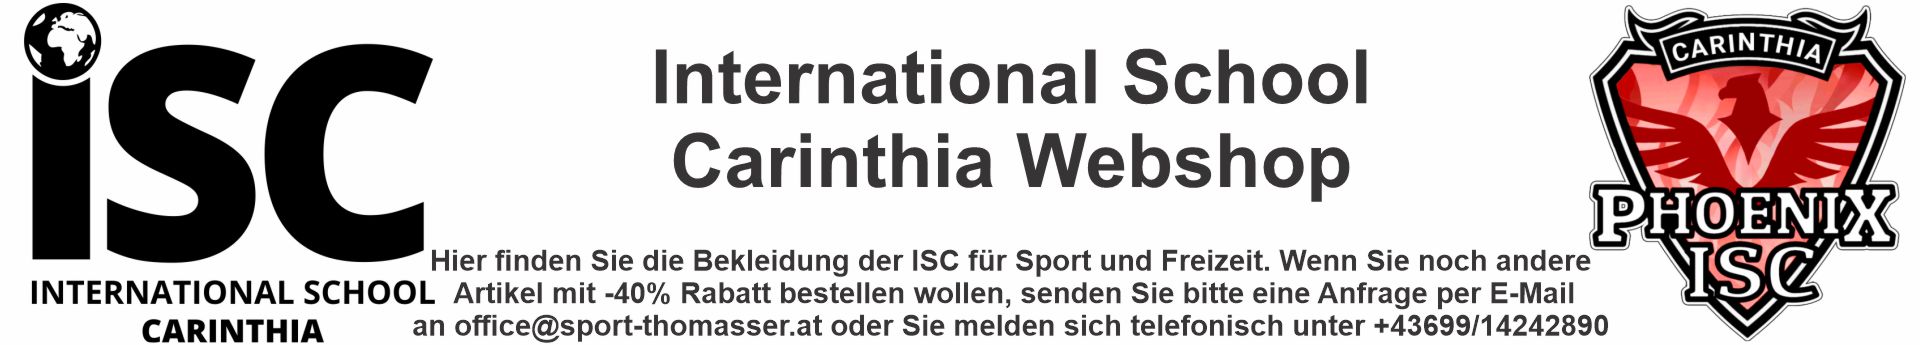 ISC International School Carinthia Title Image